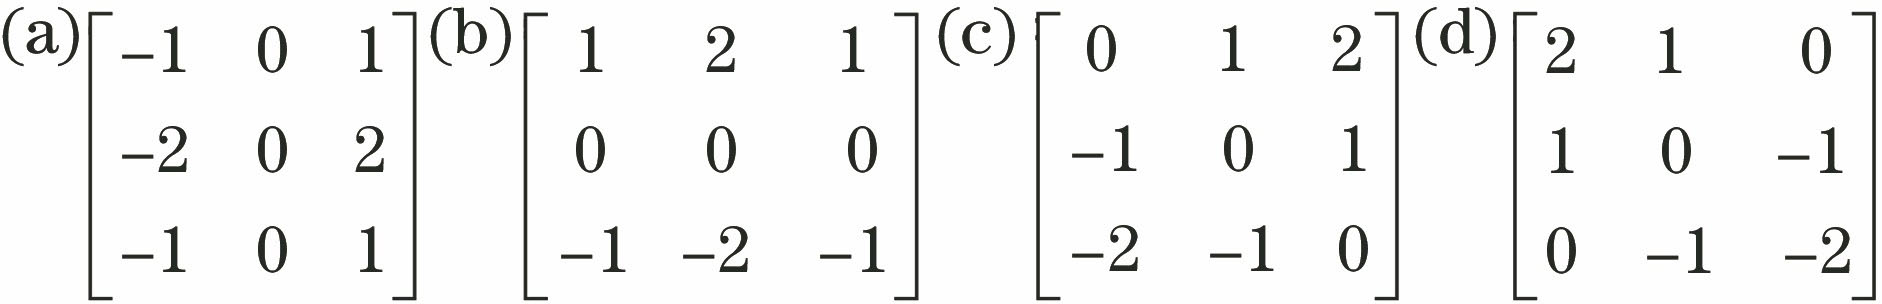 Sobel operator. (a) Horizontal direction; (b) vertical direction; (c) 45° direction; (d) 135° direction